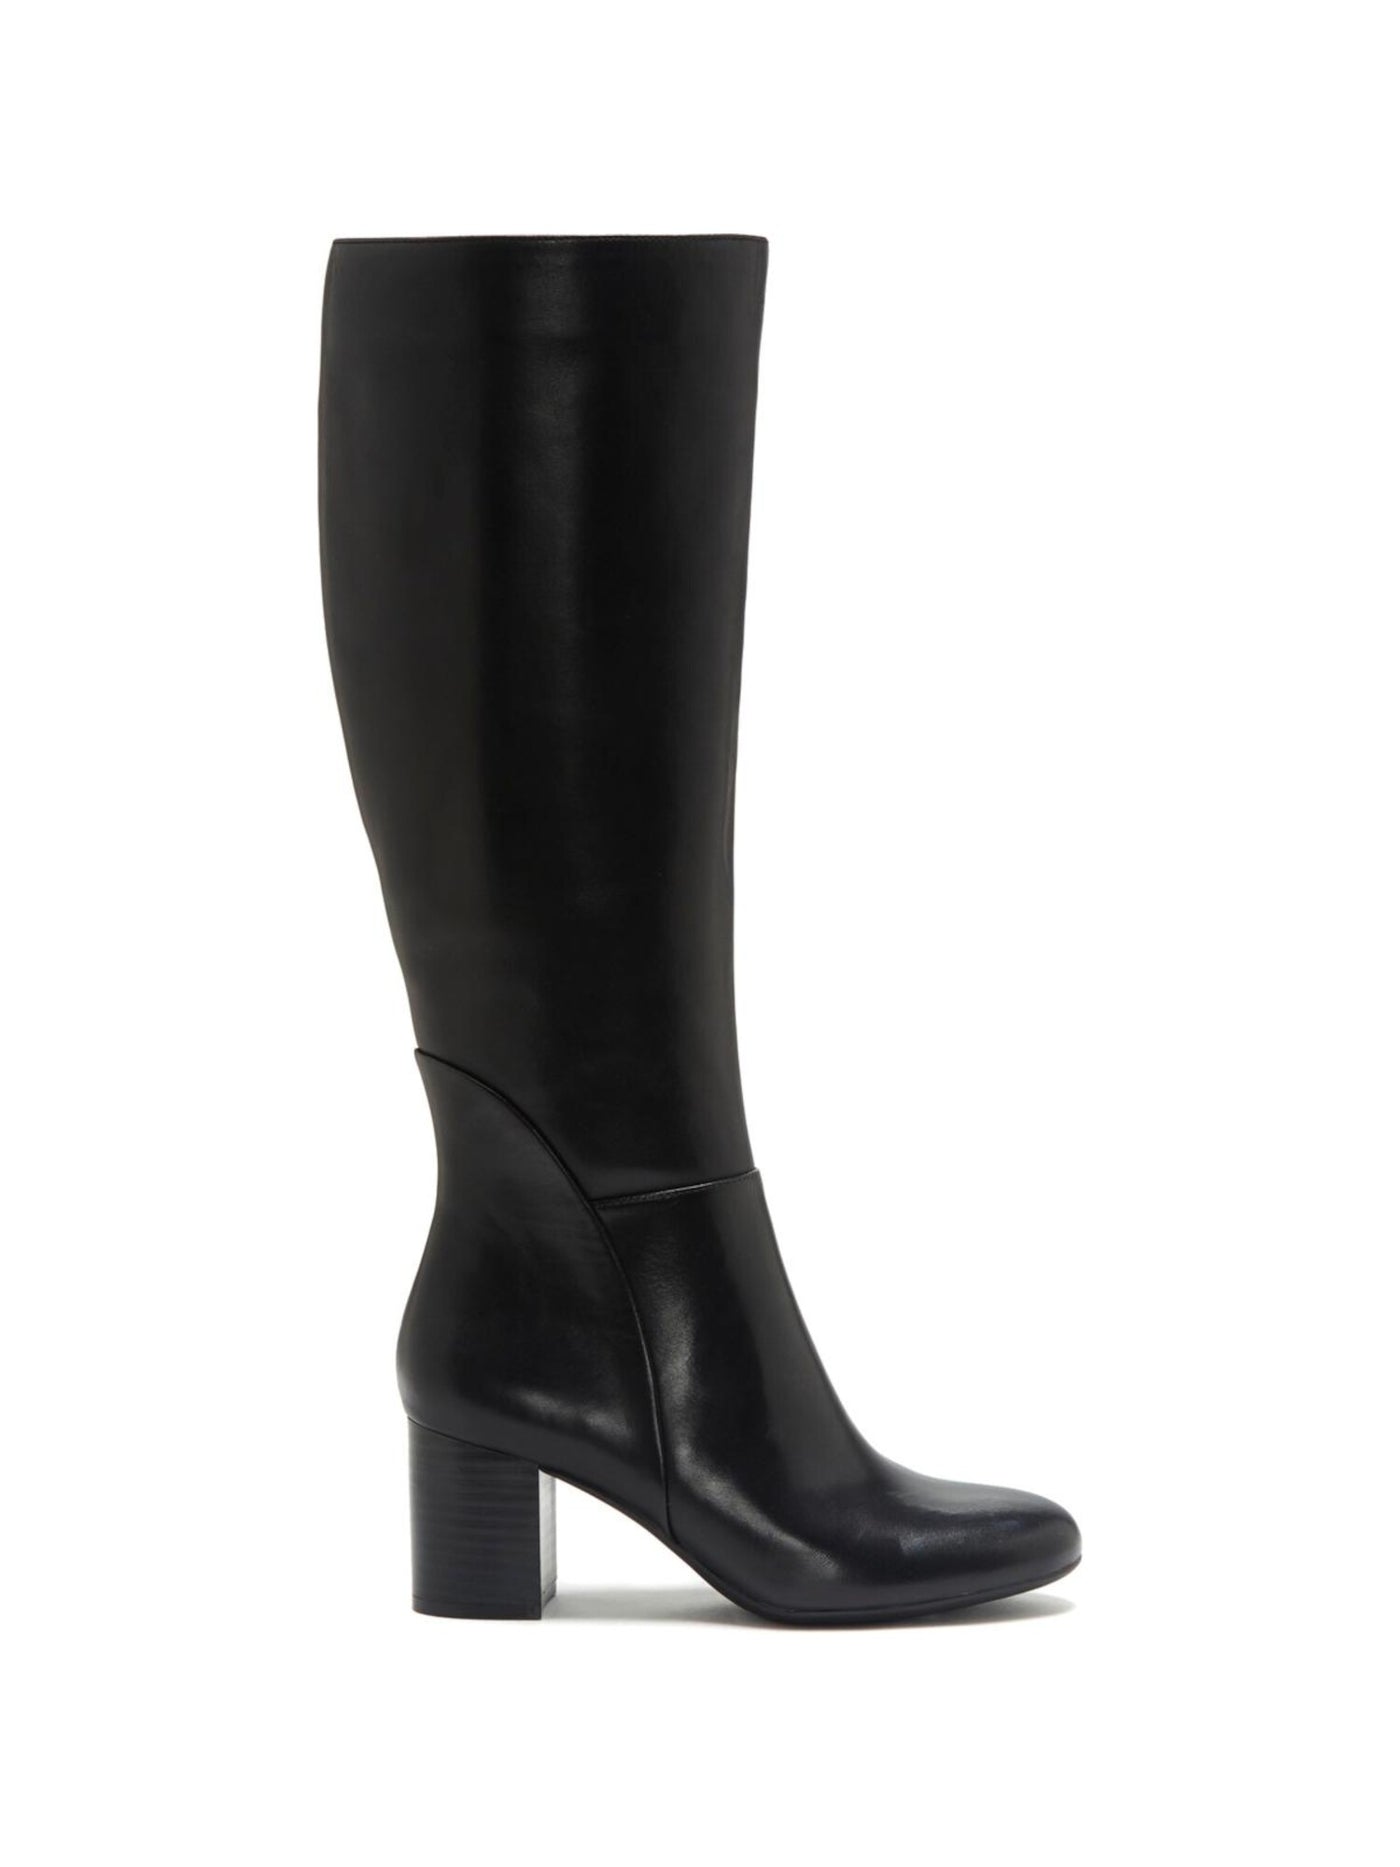 INC Womens Black Block Heel Zip-Up Leather Dress Boots Shoes 5.5